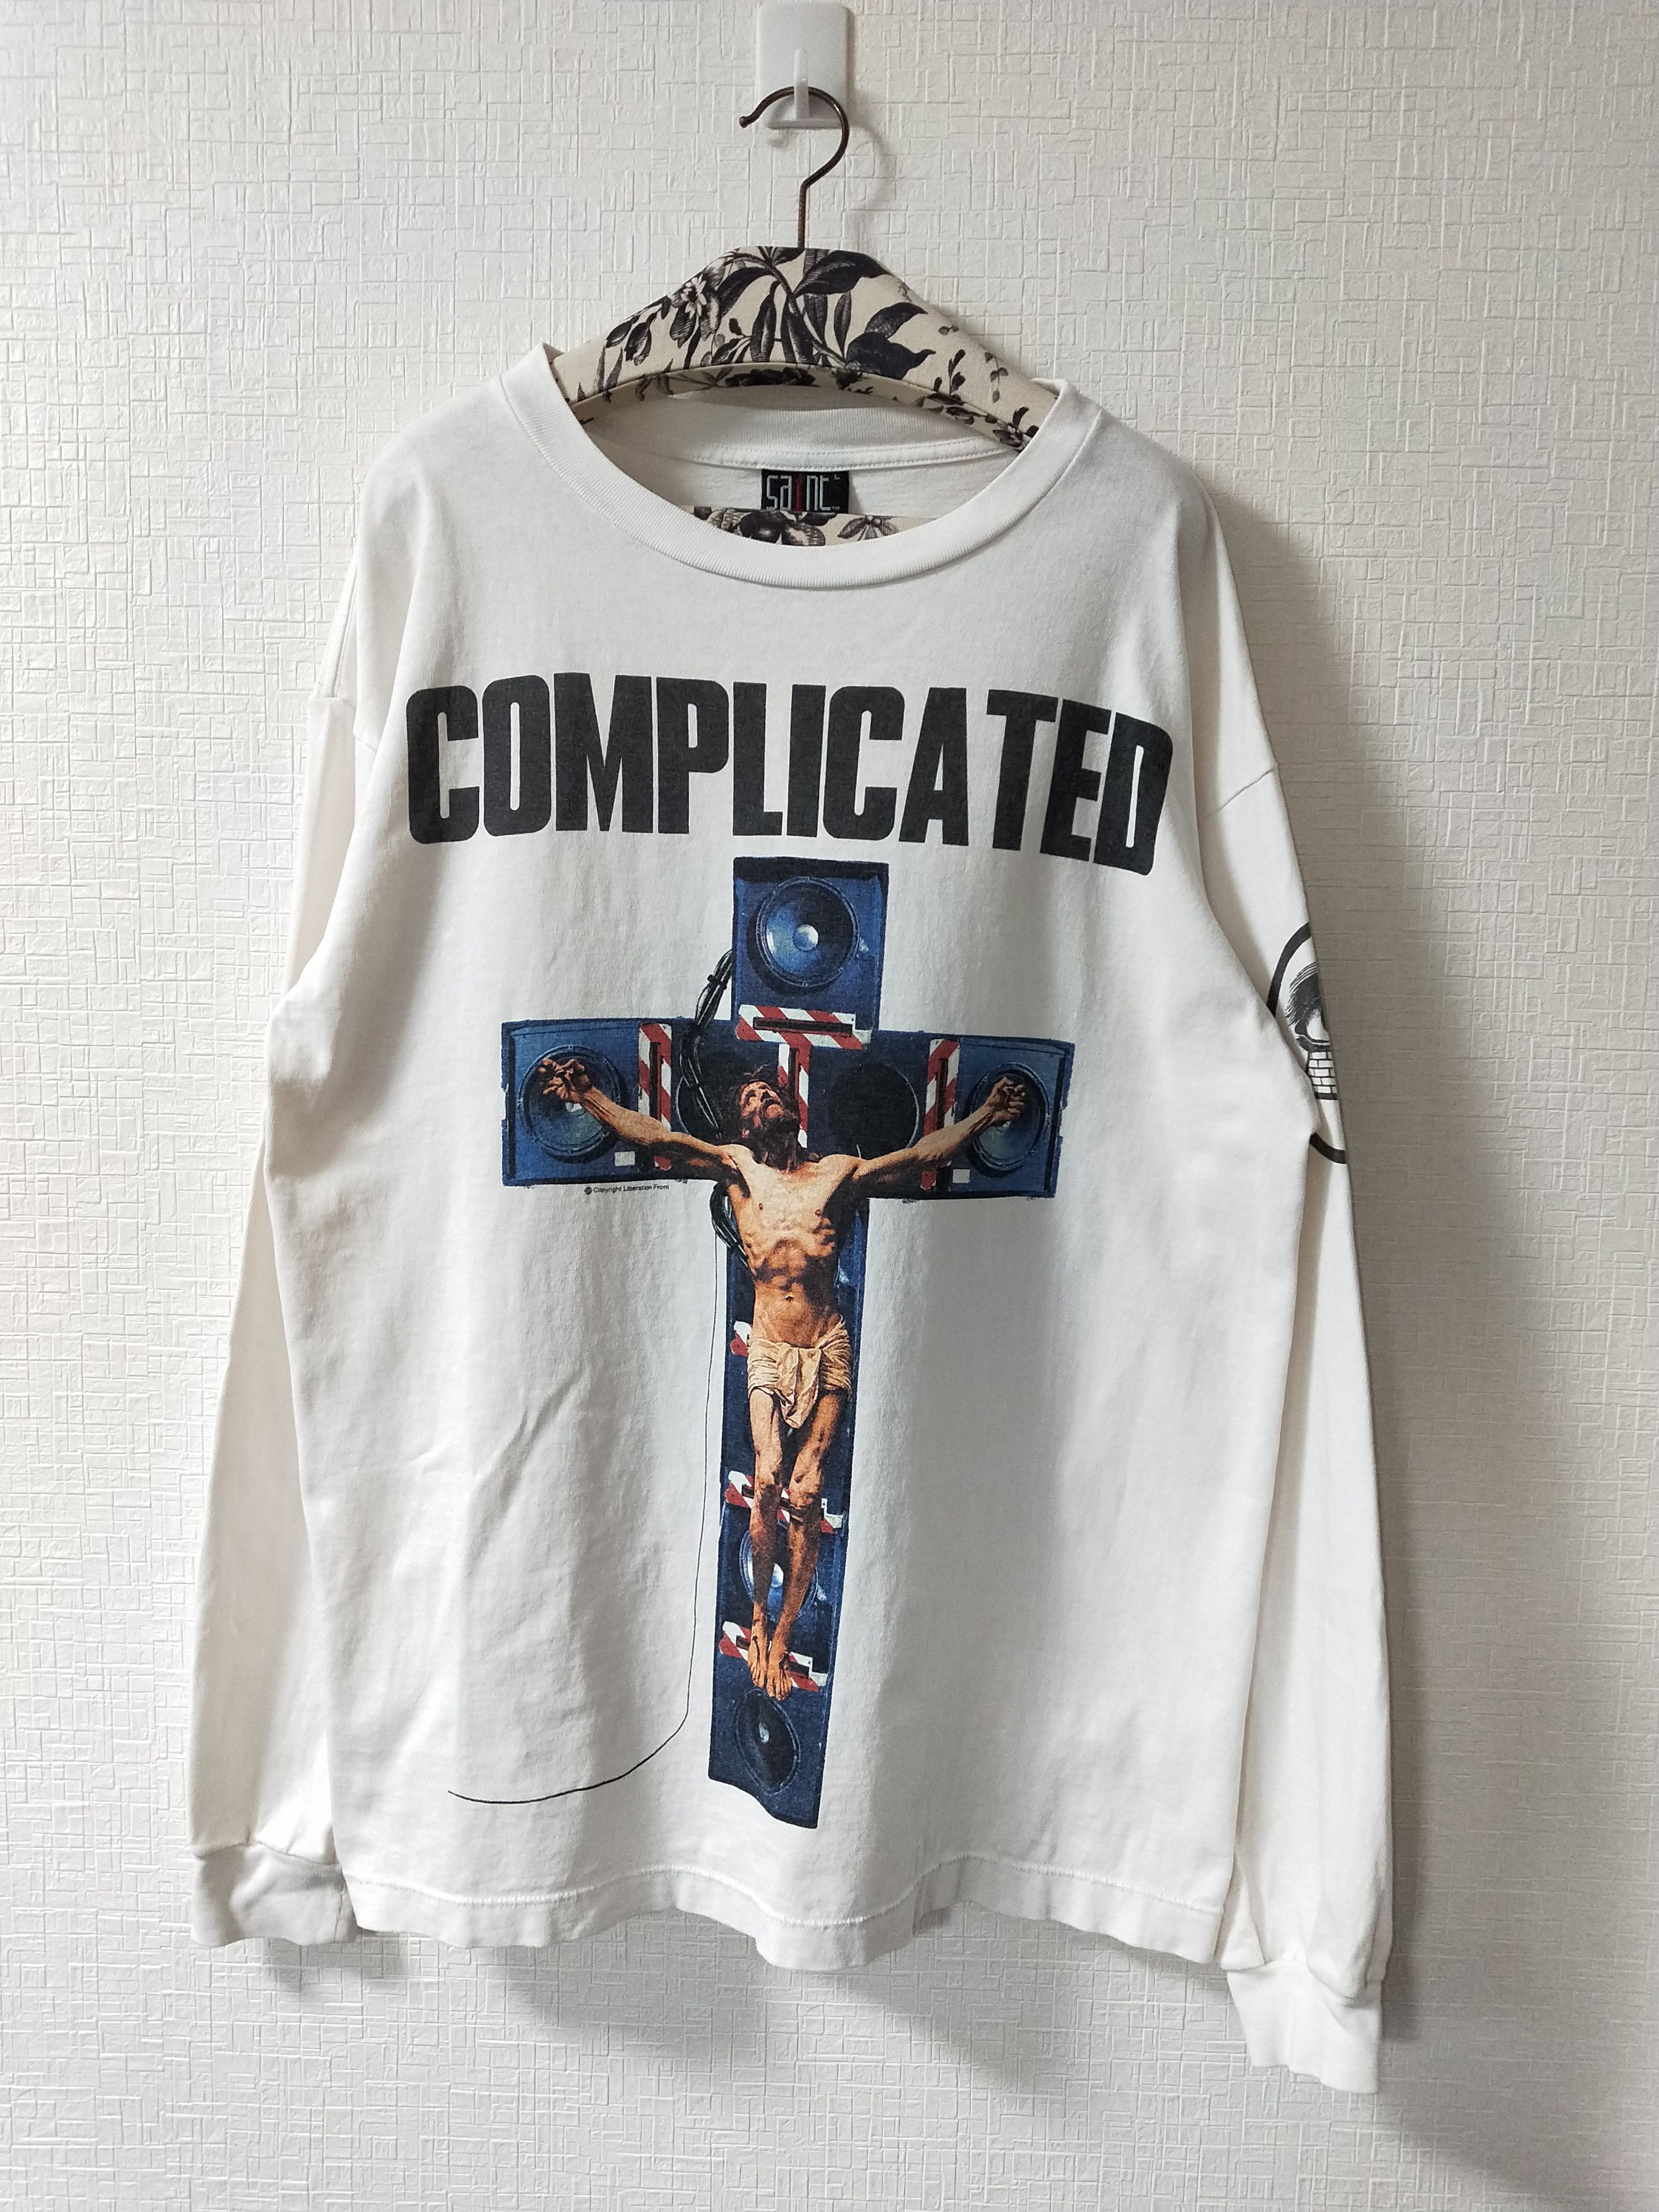 Saint Michael Kosuke Kawamura 'Complicated' Jesus L/S Tee | Grailed